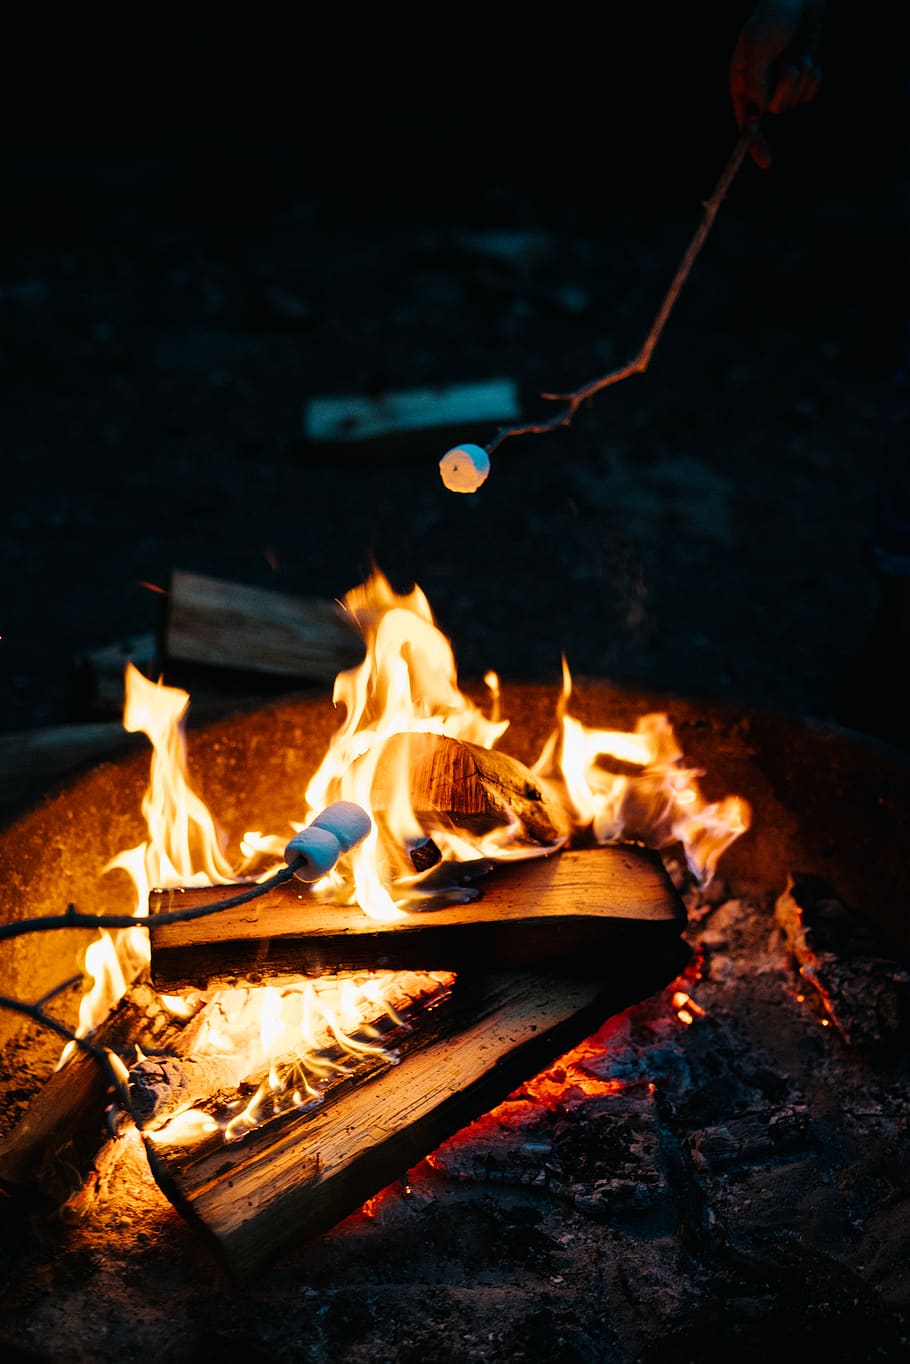 A marshmallow roasting over a campfire. - Marshmallows